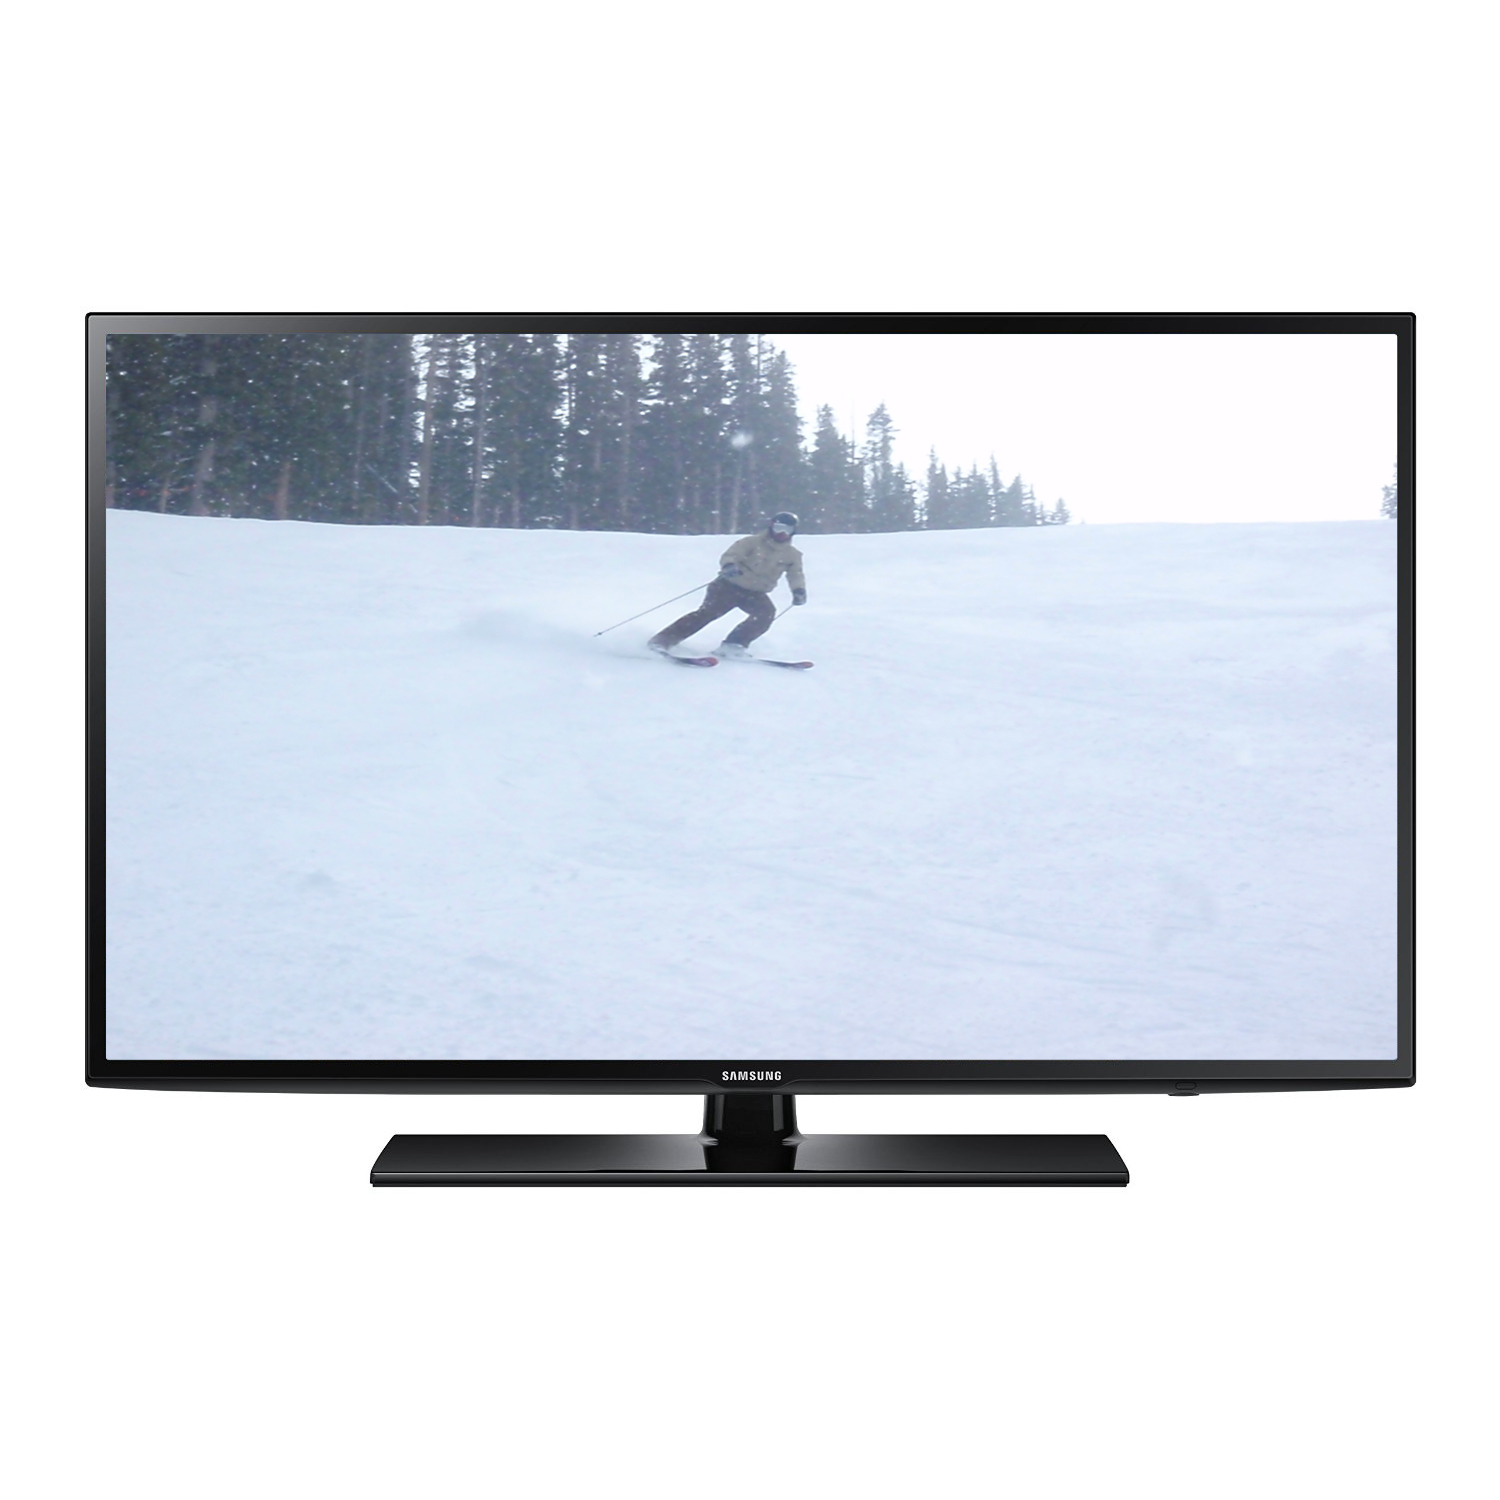 Samsung Refurbished 55" Class 1080p LED Smart HDTV - UN55J6200